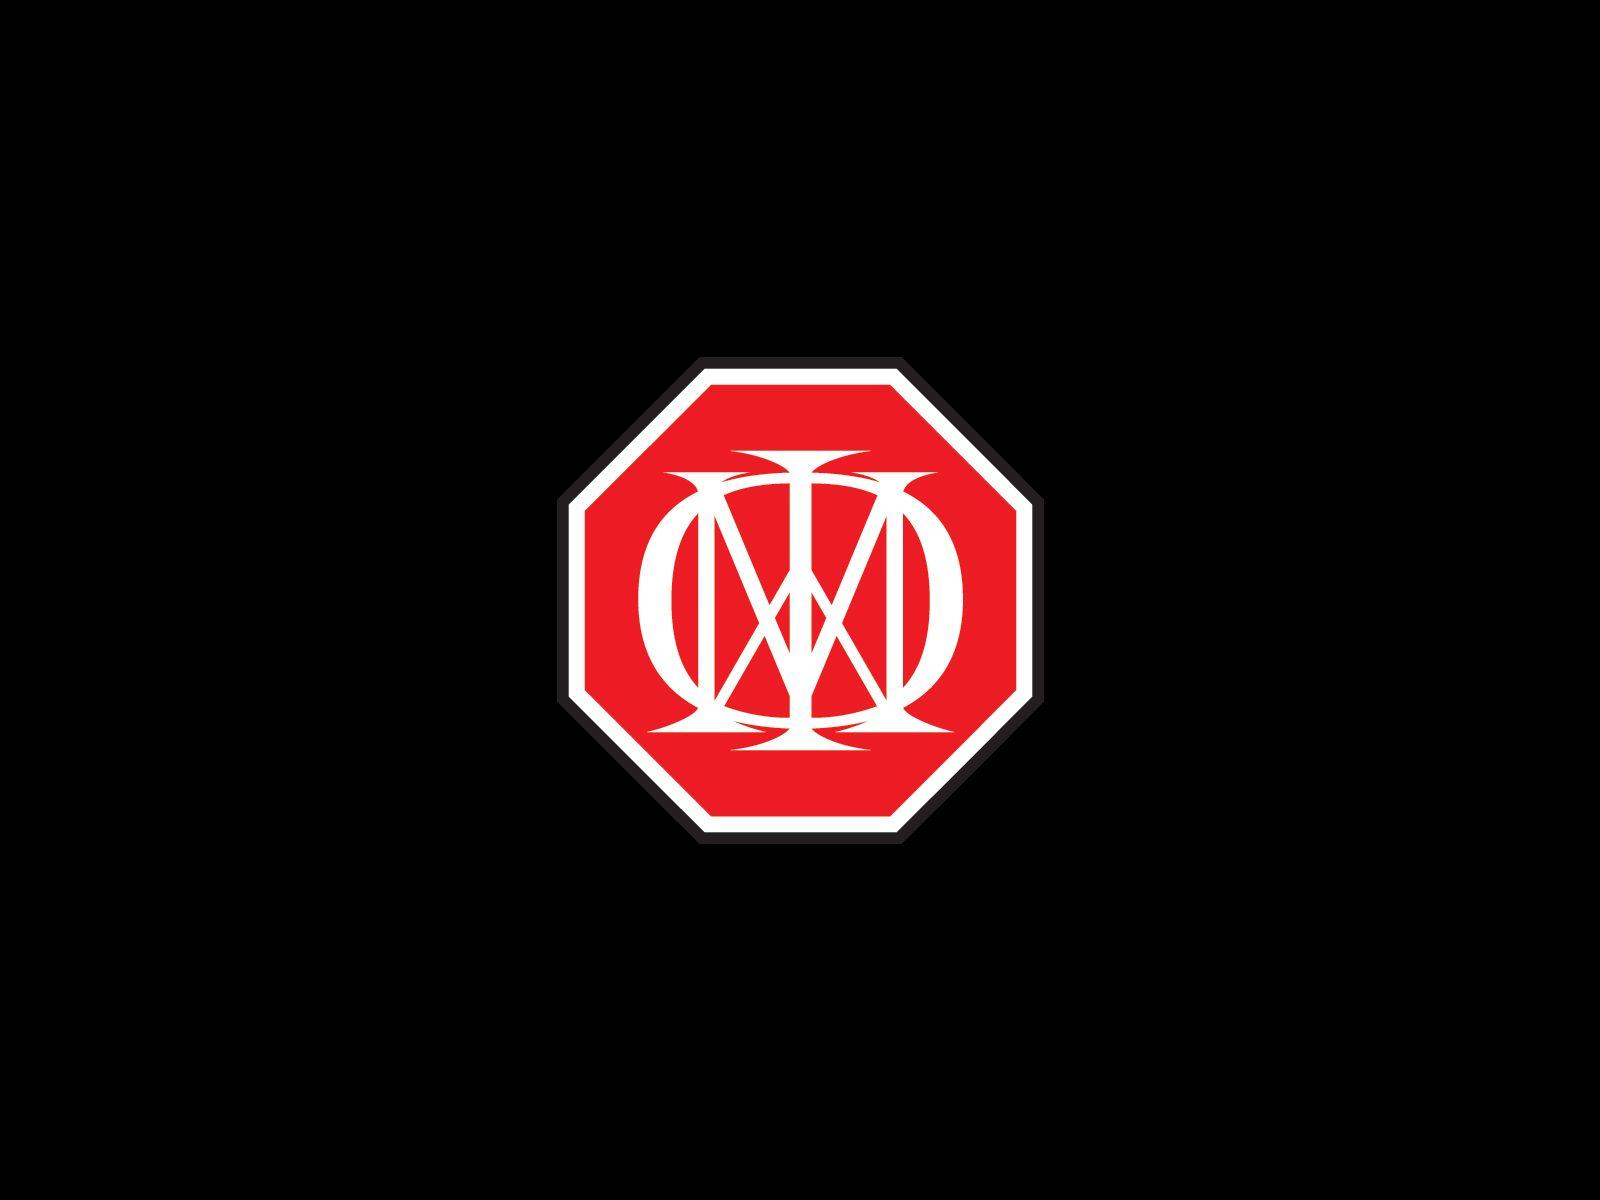 Dream Theater logo and wallpaper. Band logos band logos